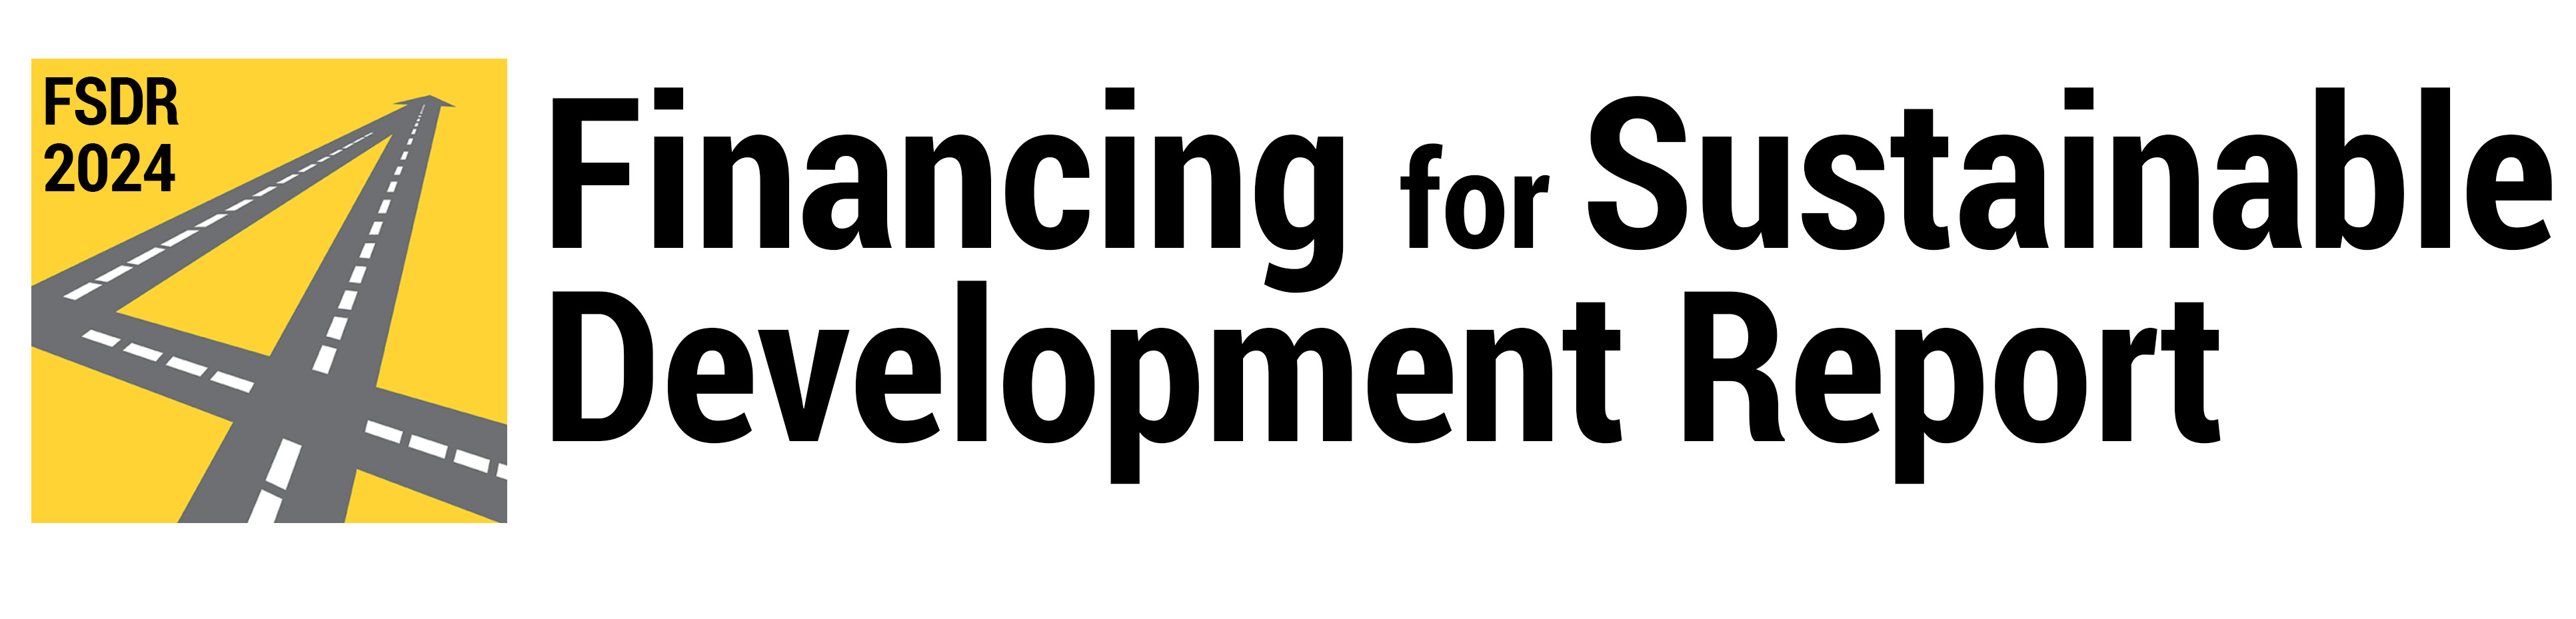 FSDR 2024 logo